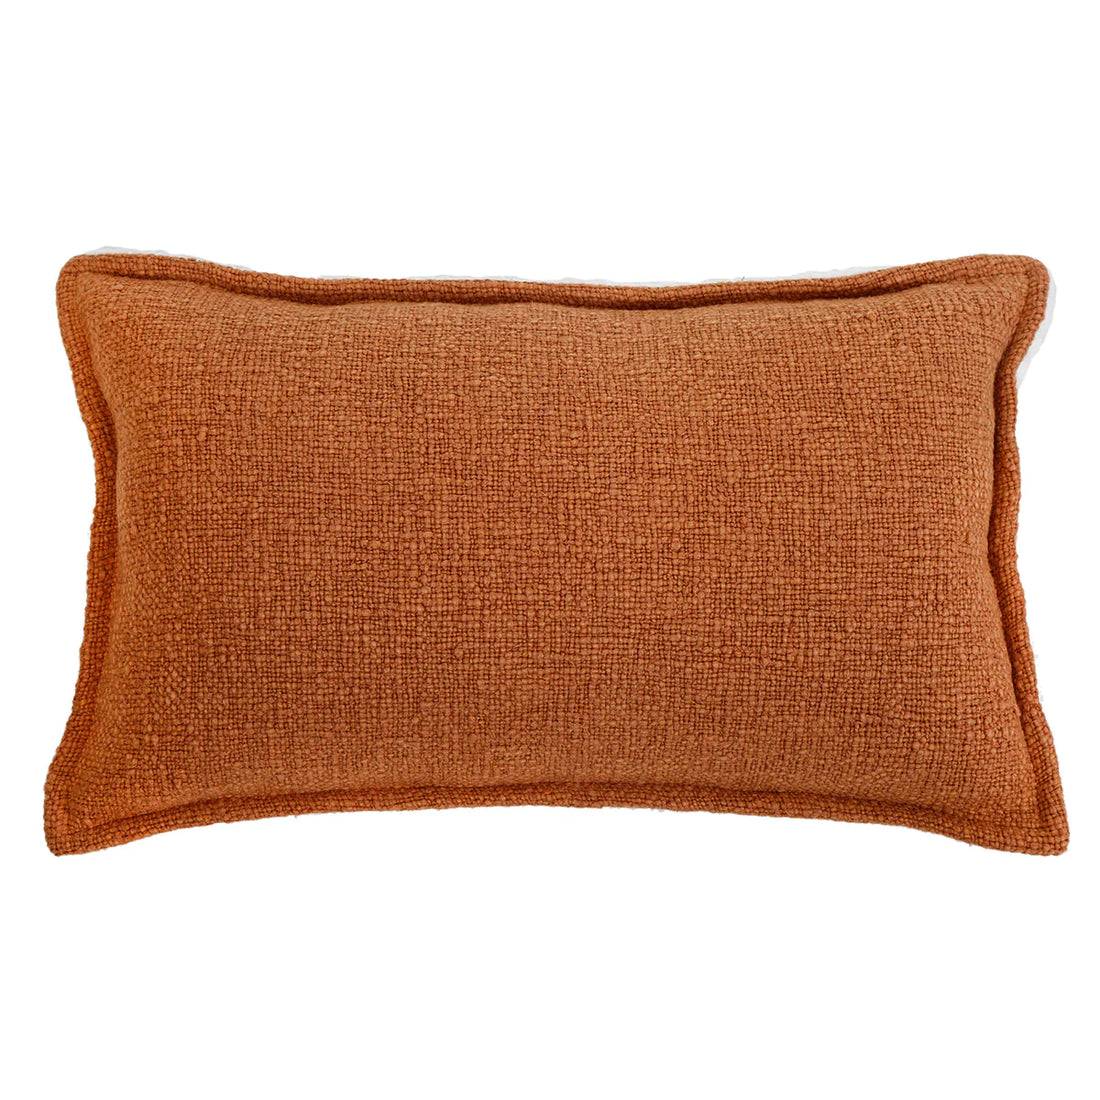 Humboldt Handwoven Rectangular Pillow, Amber